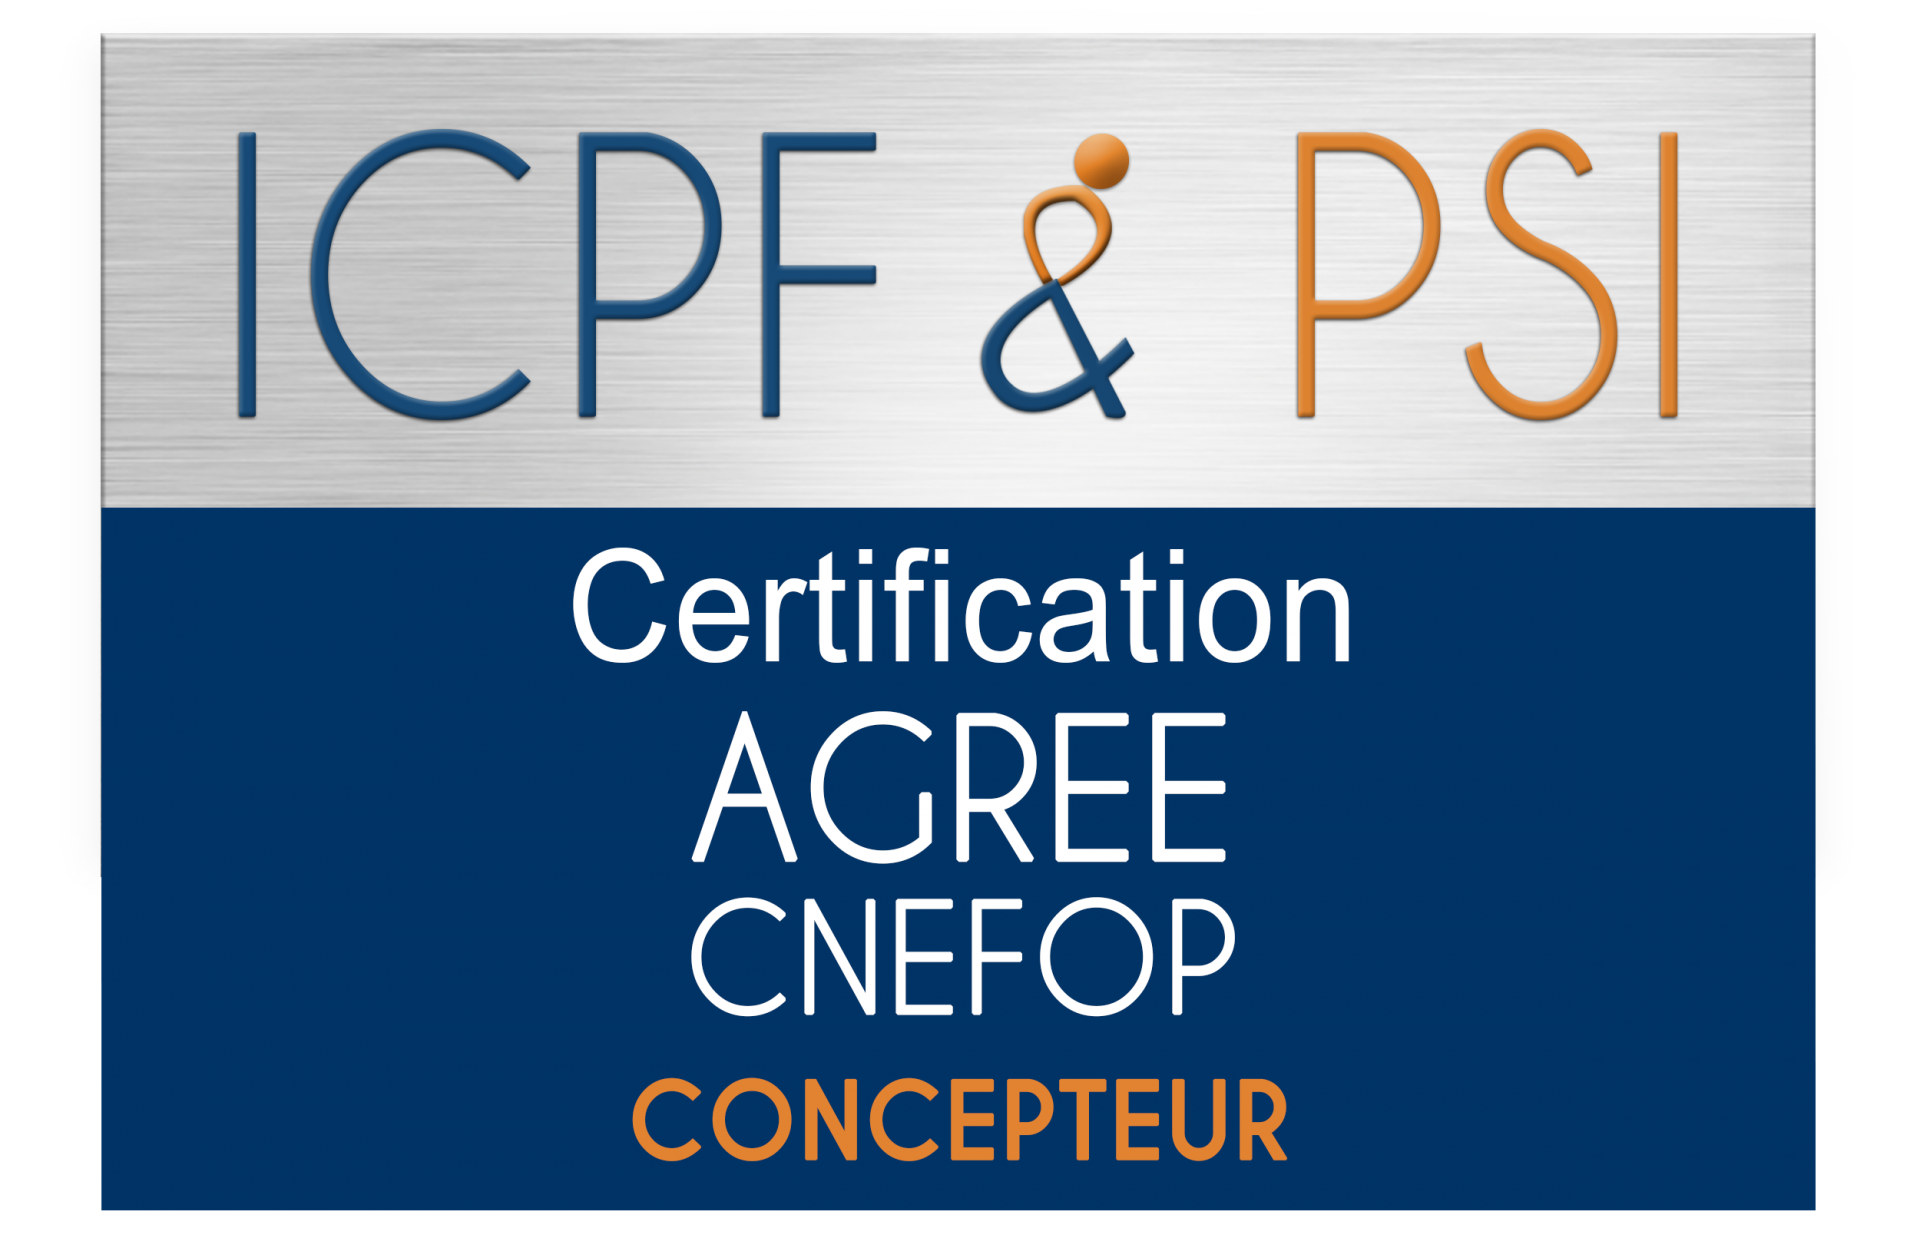 Logo icpf psi agree cnefop concepteur christel ceccotto